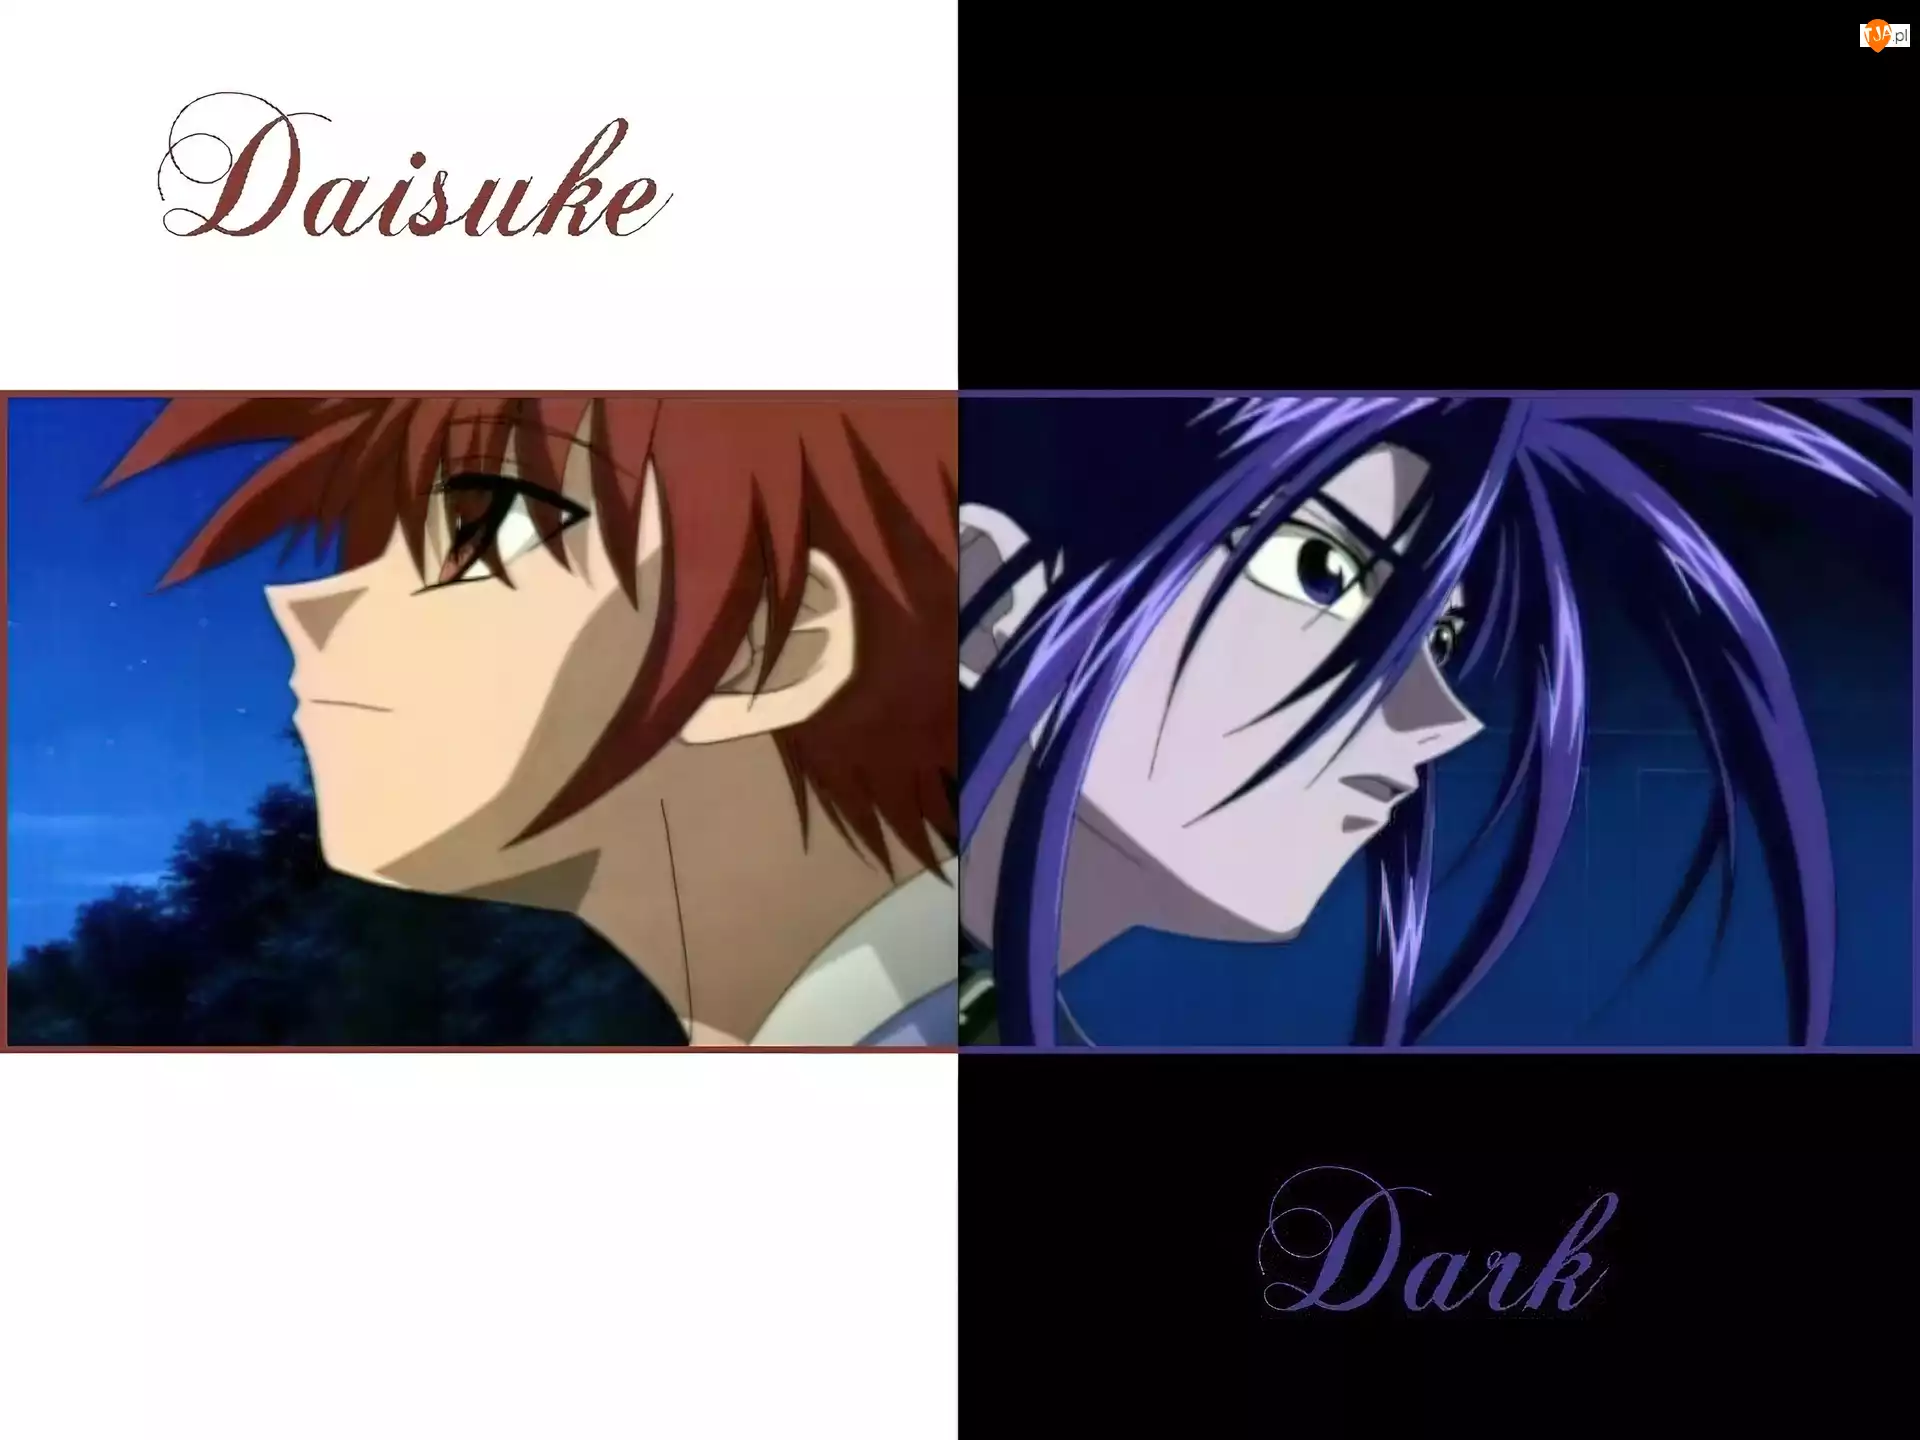 twarze, D N Angel, Dark, Daisuke, ludzie